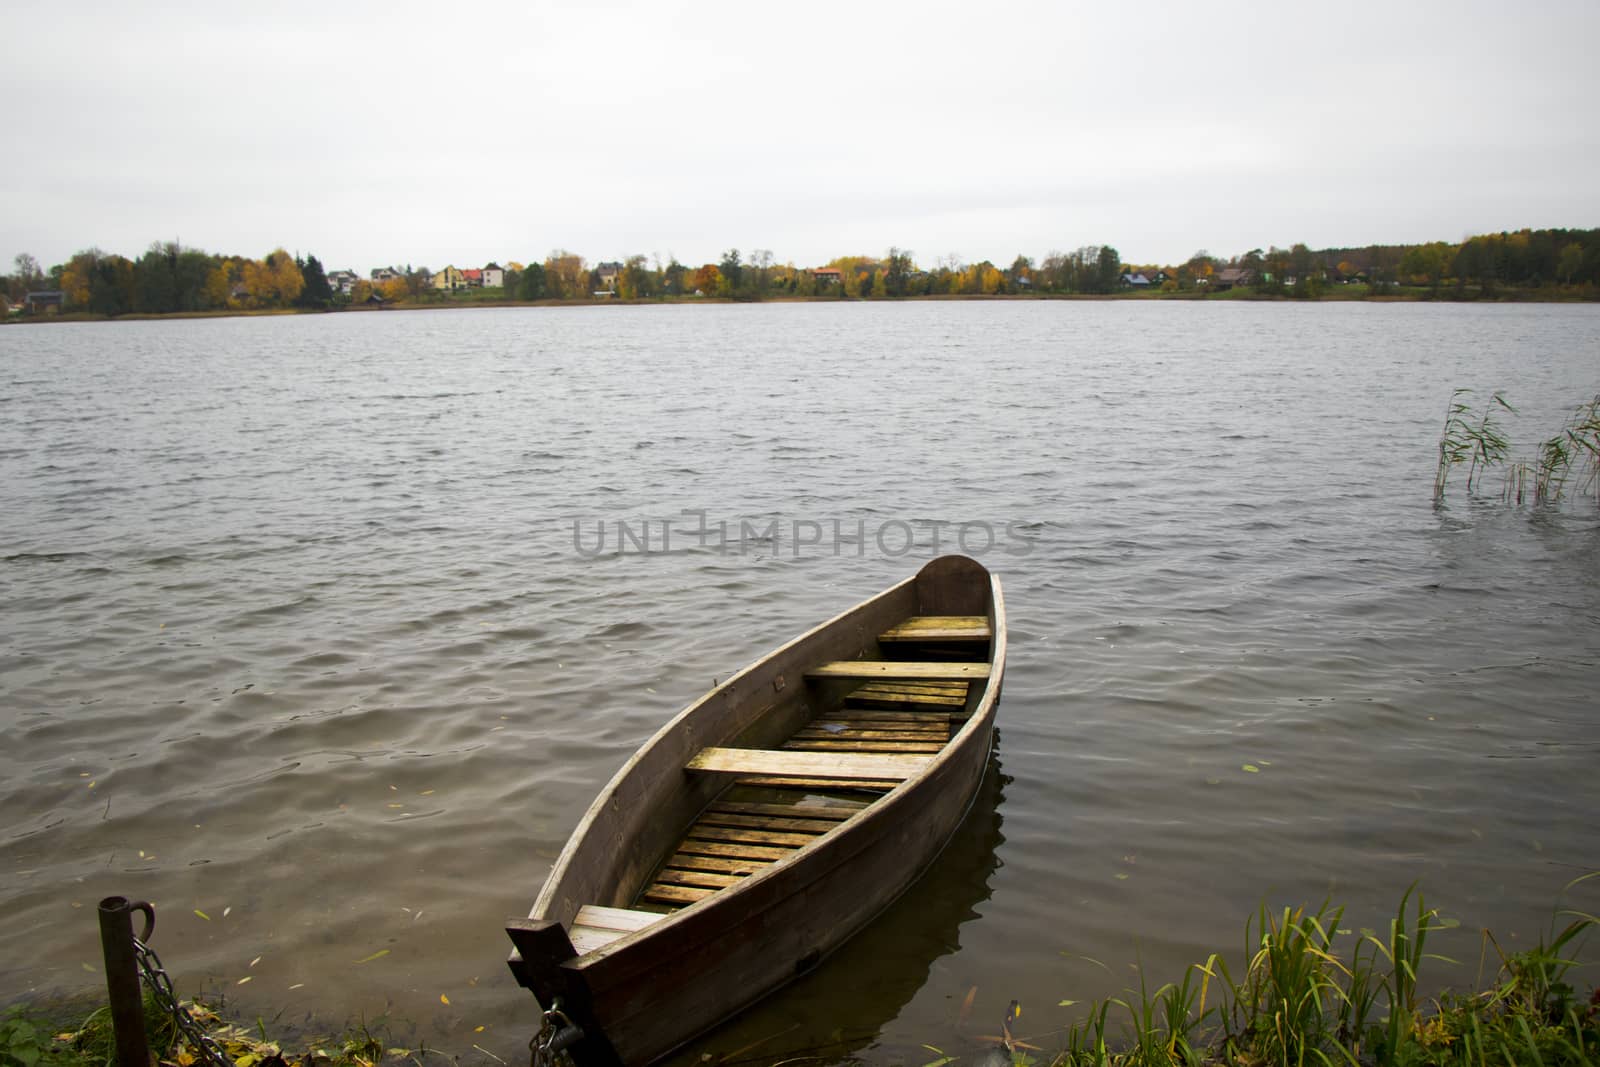 Old wooden boats near the beach of Trakai Gavle lake lake, Lithuania. Autumn and fall time.